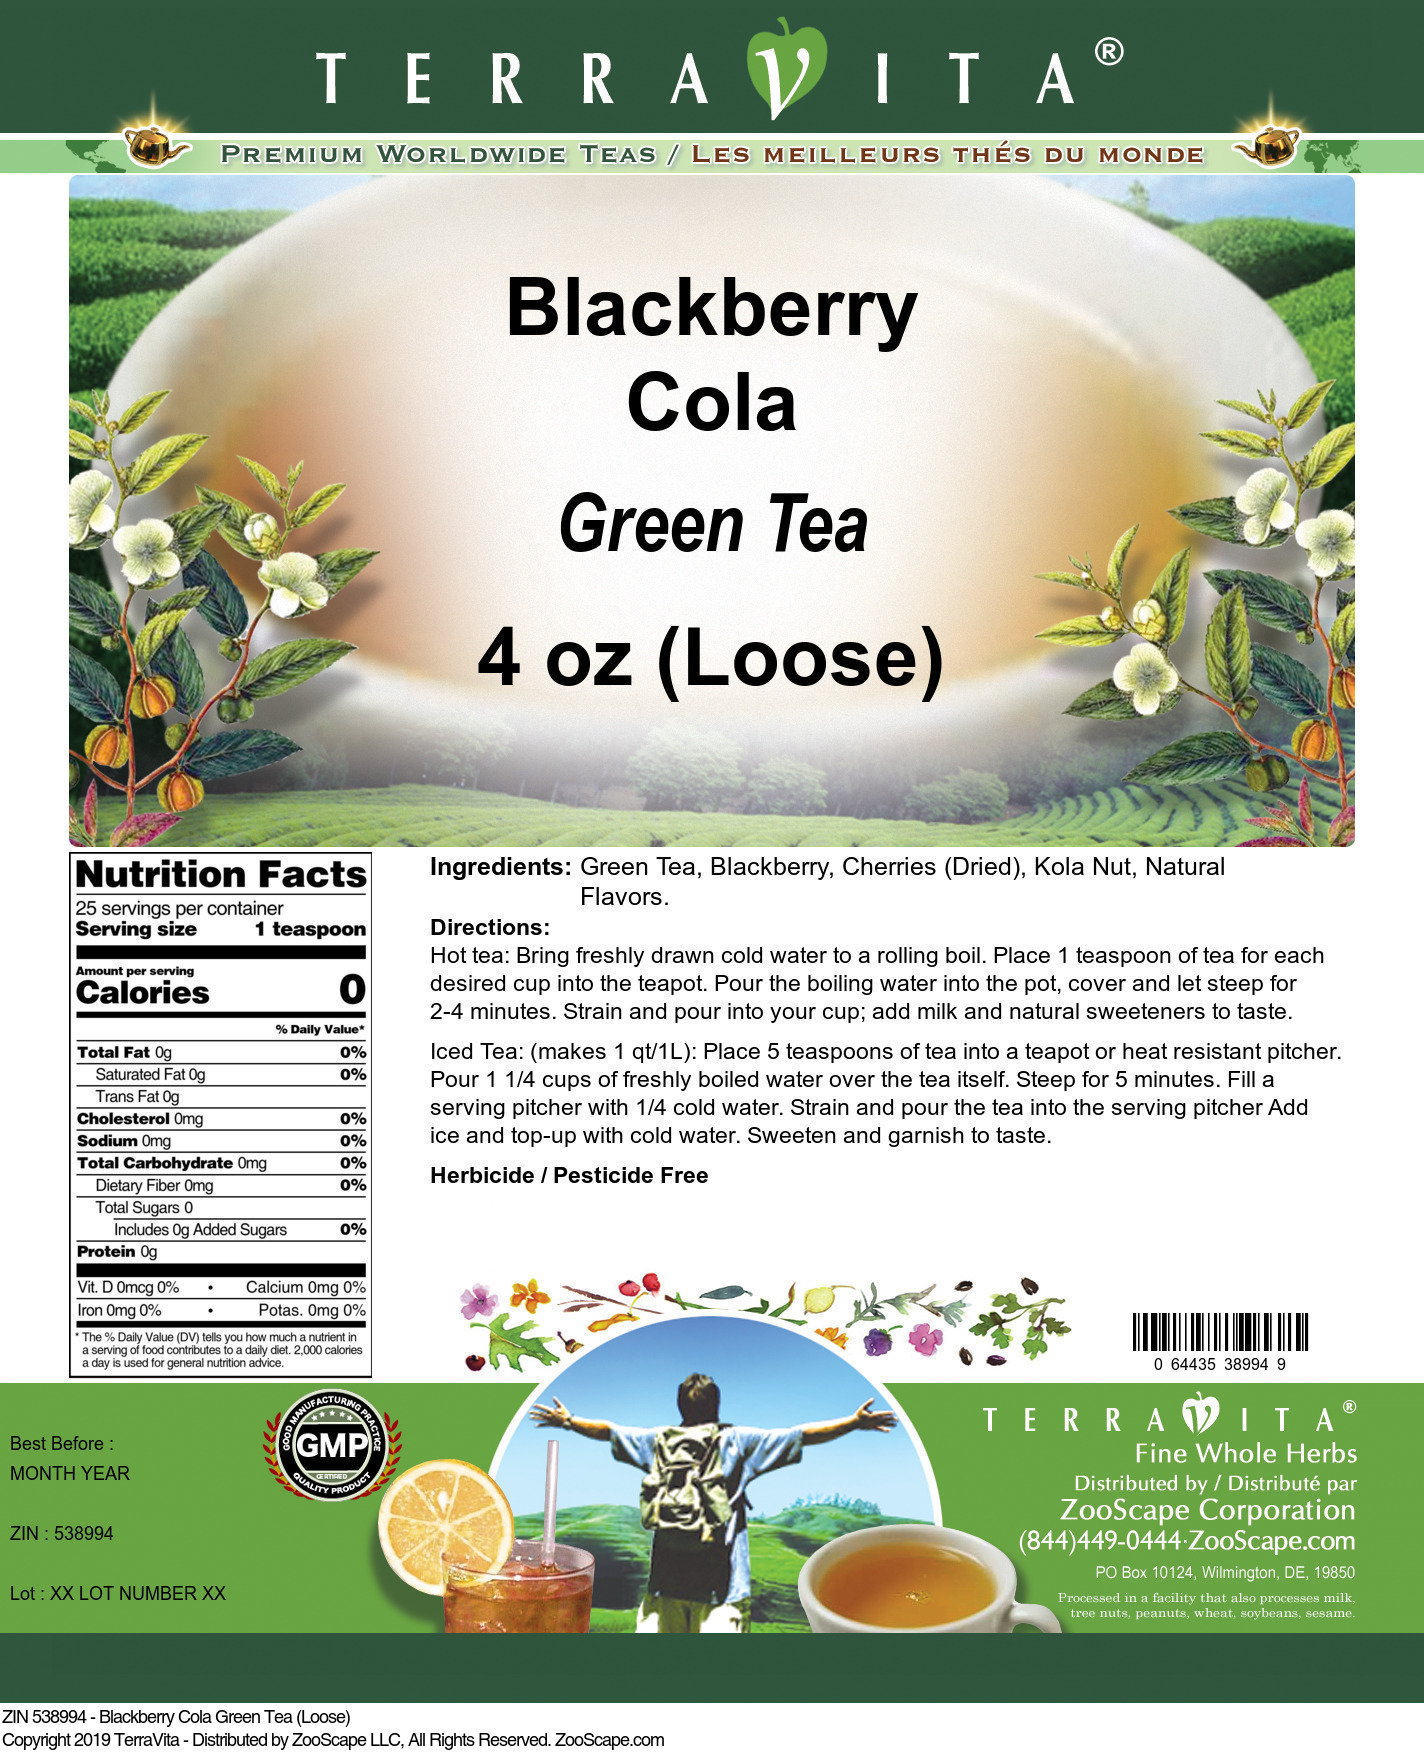 Blackberry Cola Green Tea (Loose) - Label